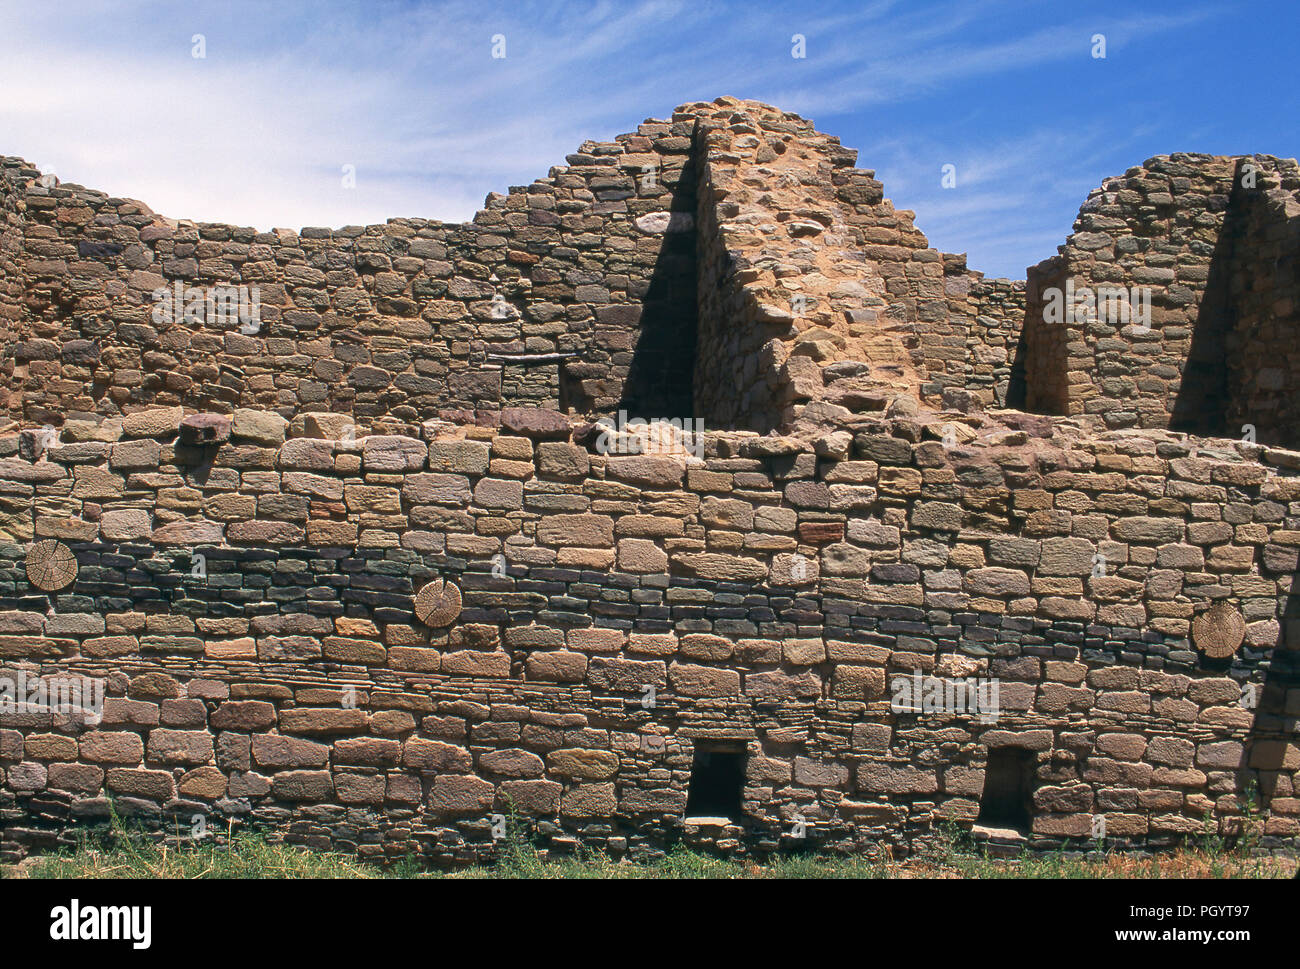 Ancestral Puebloan/Anasazi Ruinen, Aztec National Monument, New Mexico. Foto Stockfoto